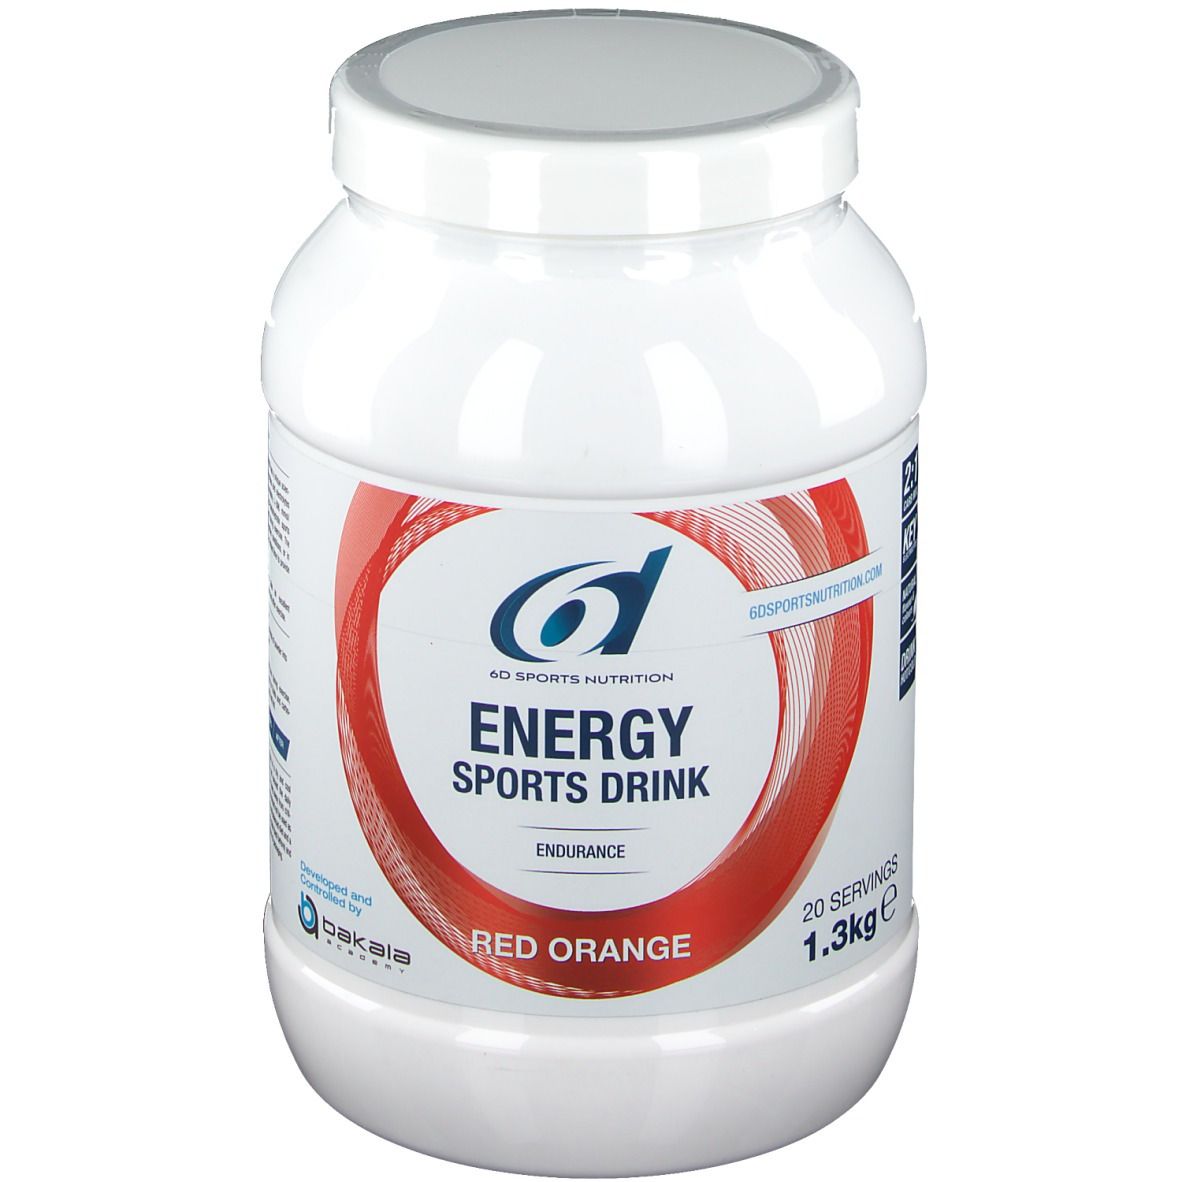 Image of 6D Sports Nutrition Energy Sports Drink Blutorange